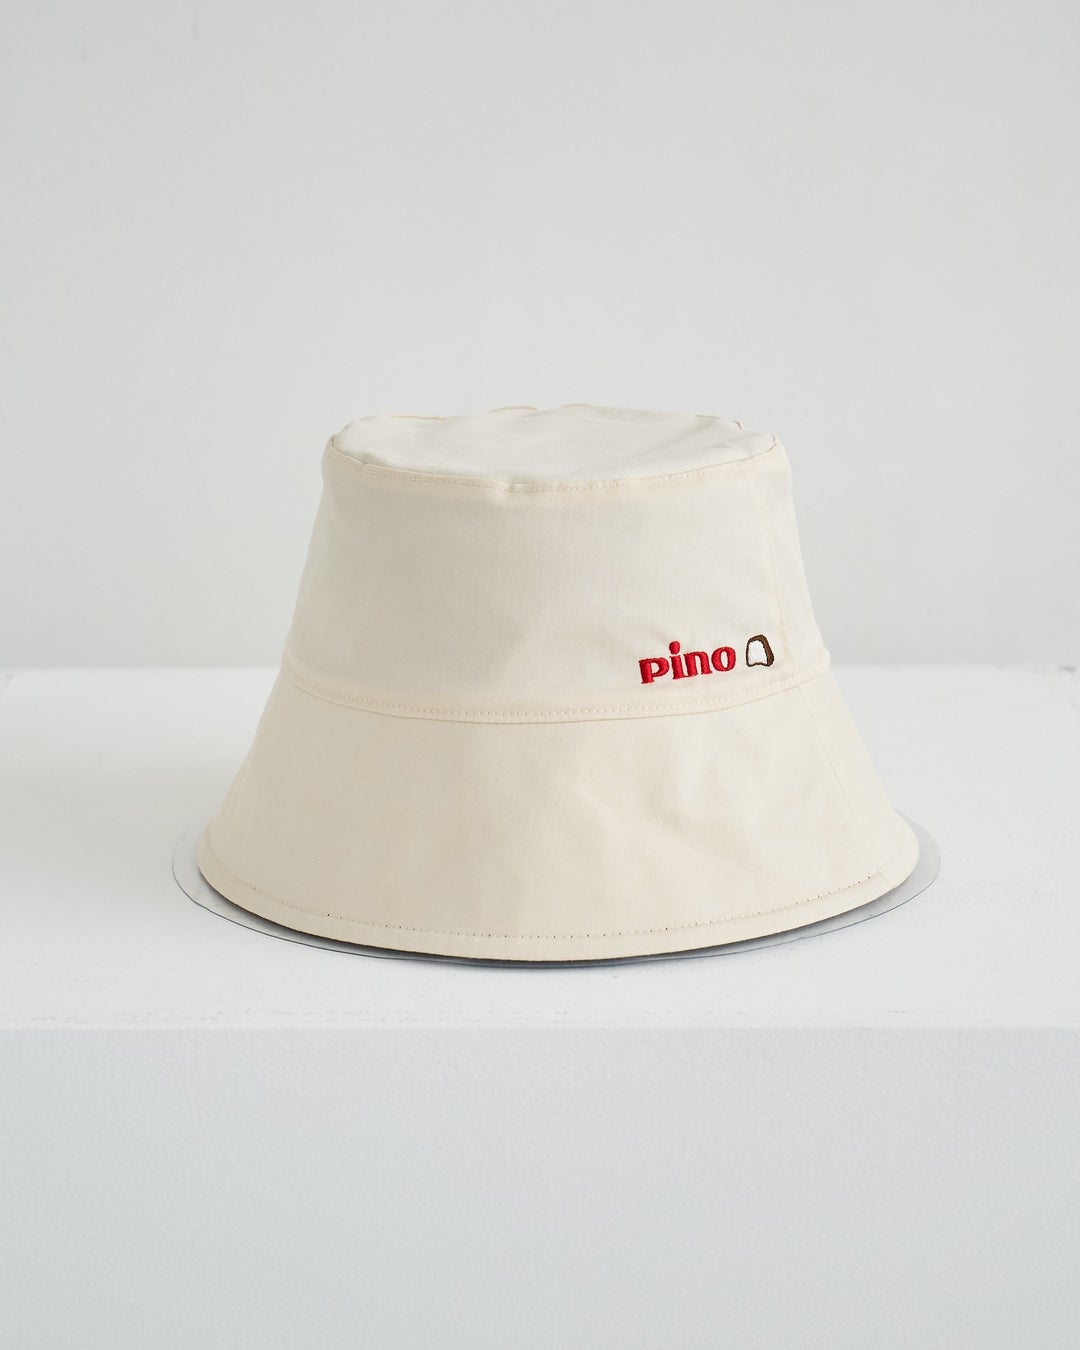 「Pino meets ROPE' PICNIC」ピノのモチーフがかわいすぎる！初のスペシャルコレクションを展開。